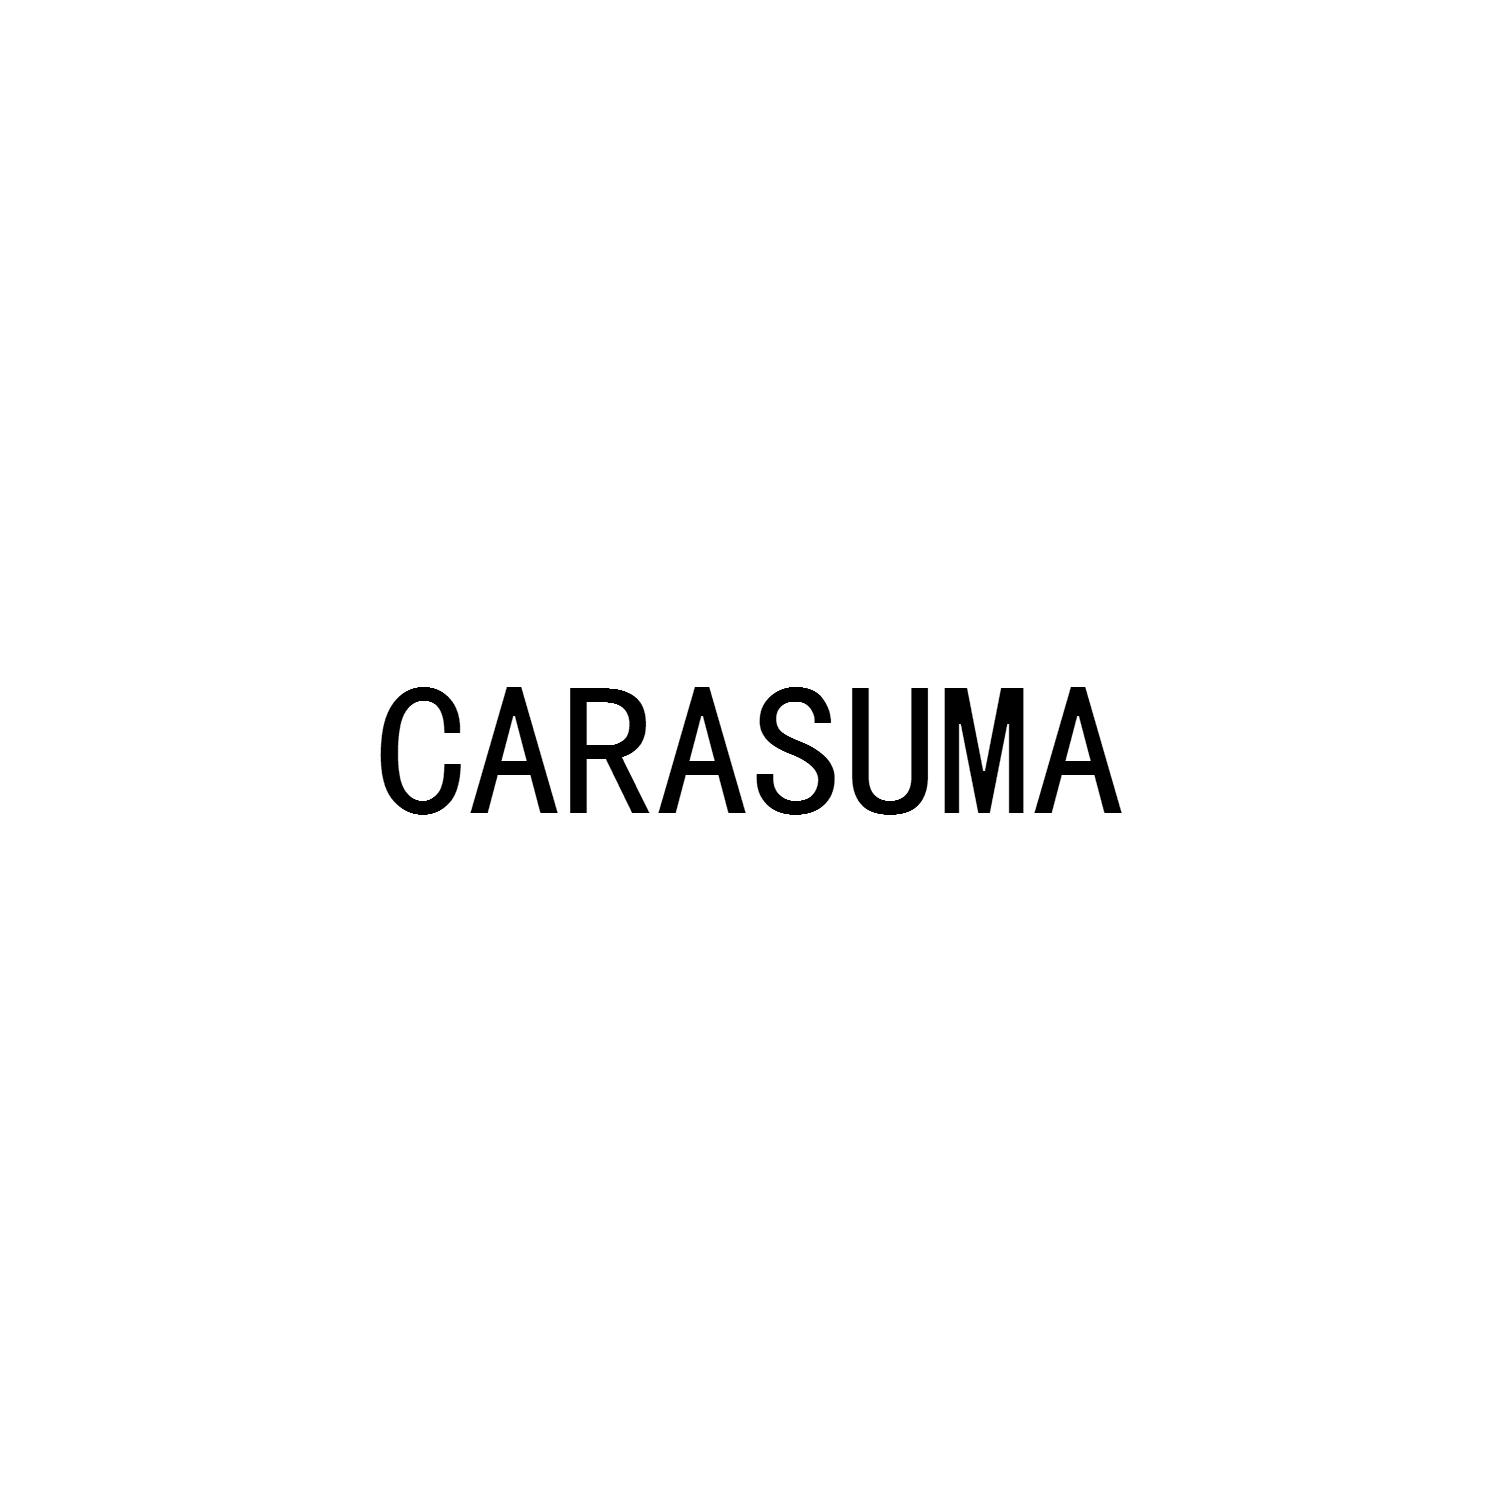 carasuma 商标公告